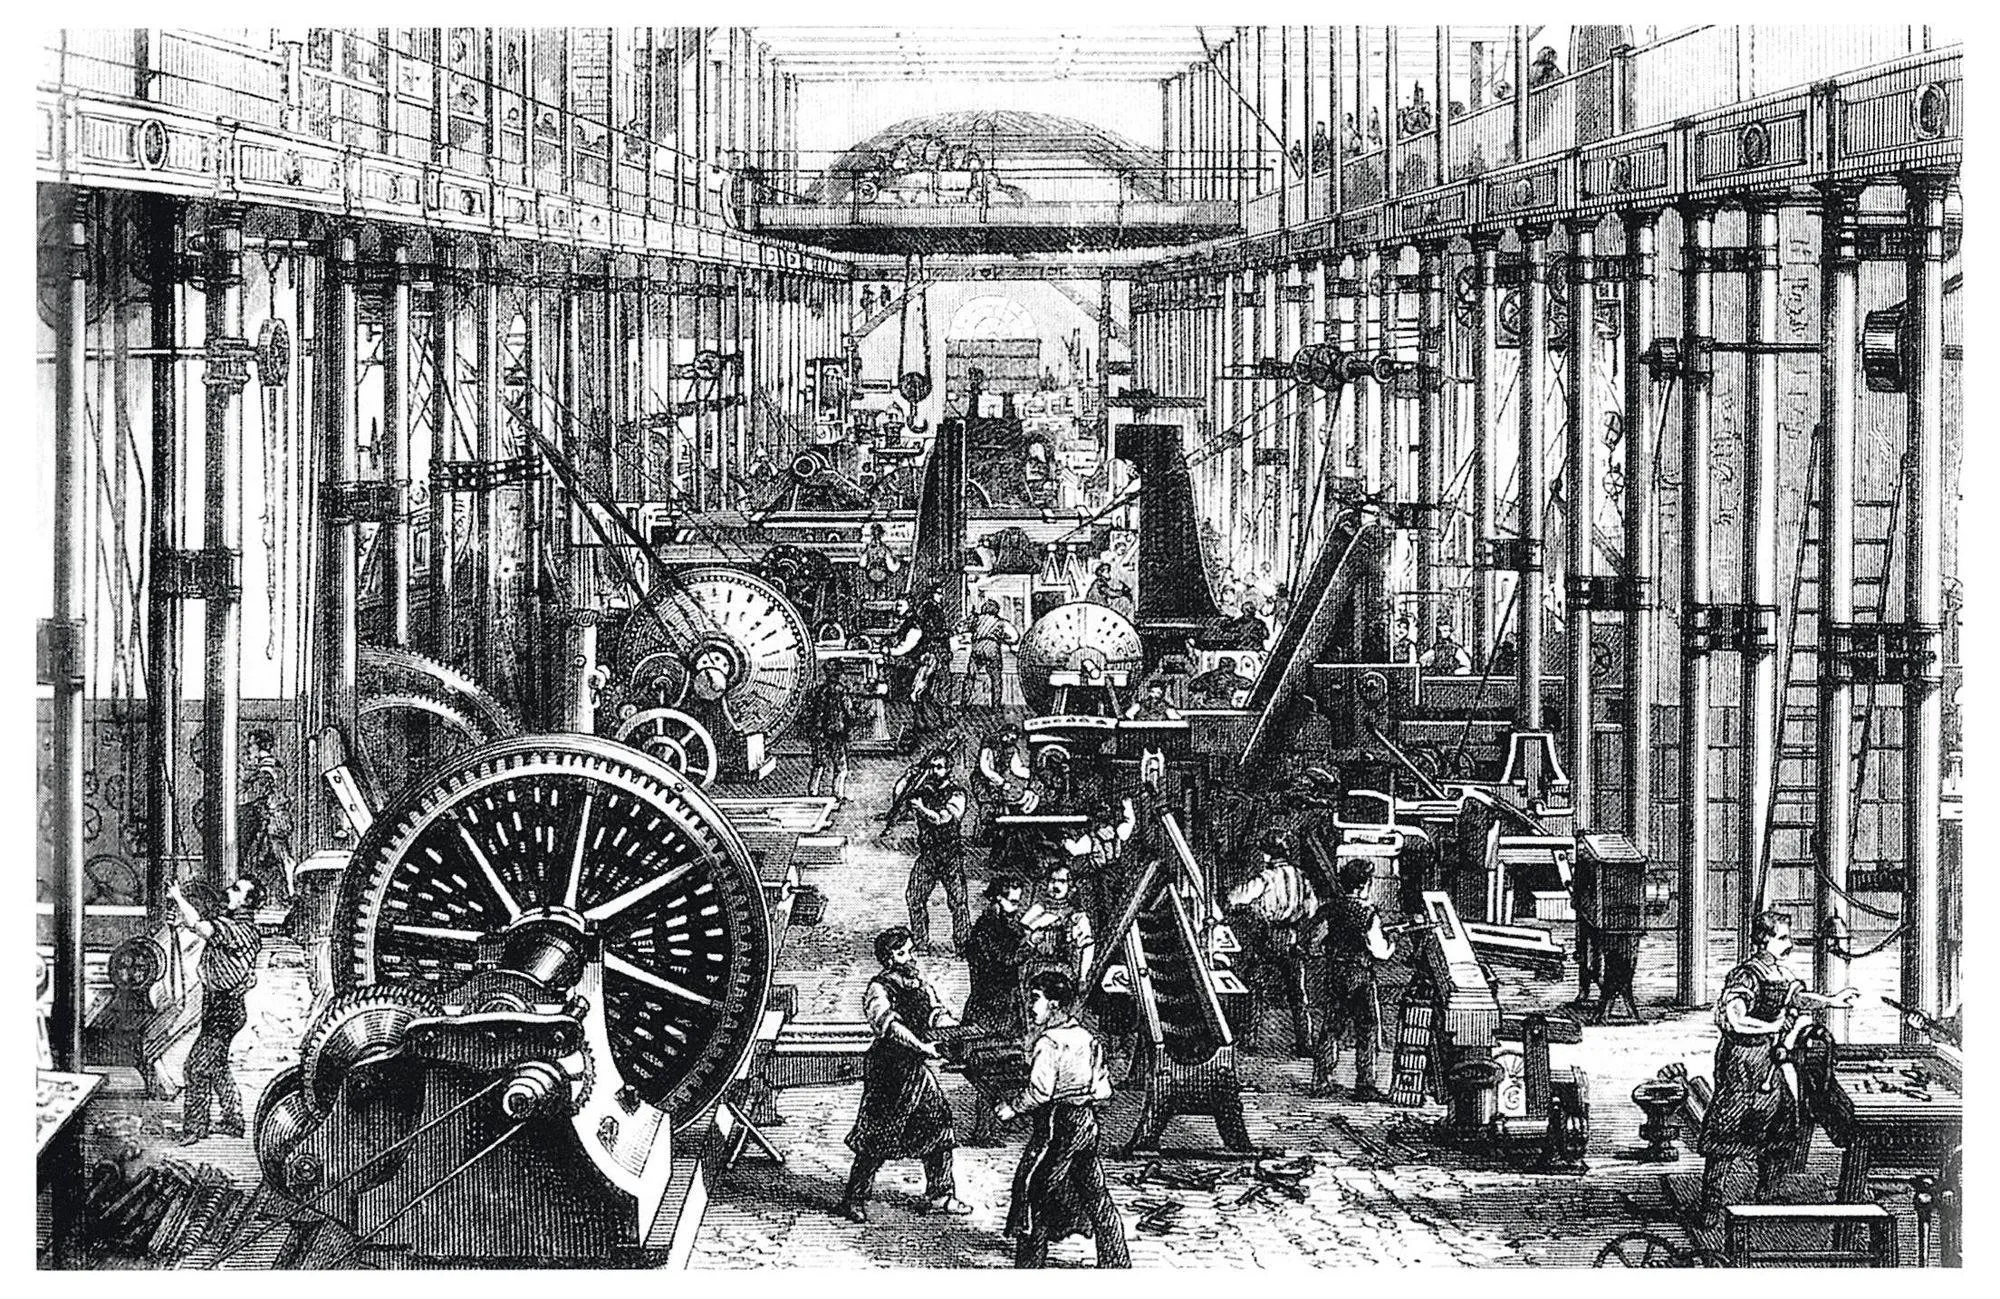 Anonyme, L'usine de Hartmann à Chemnitz (Allemagne), v. 1868, gravure.